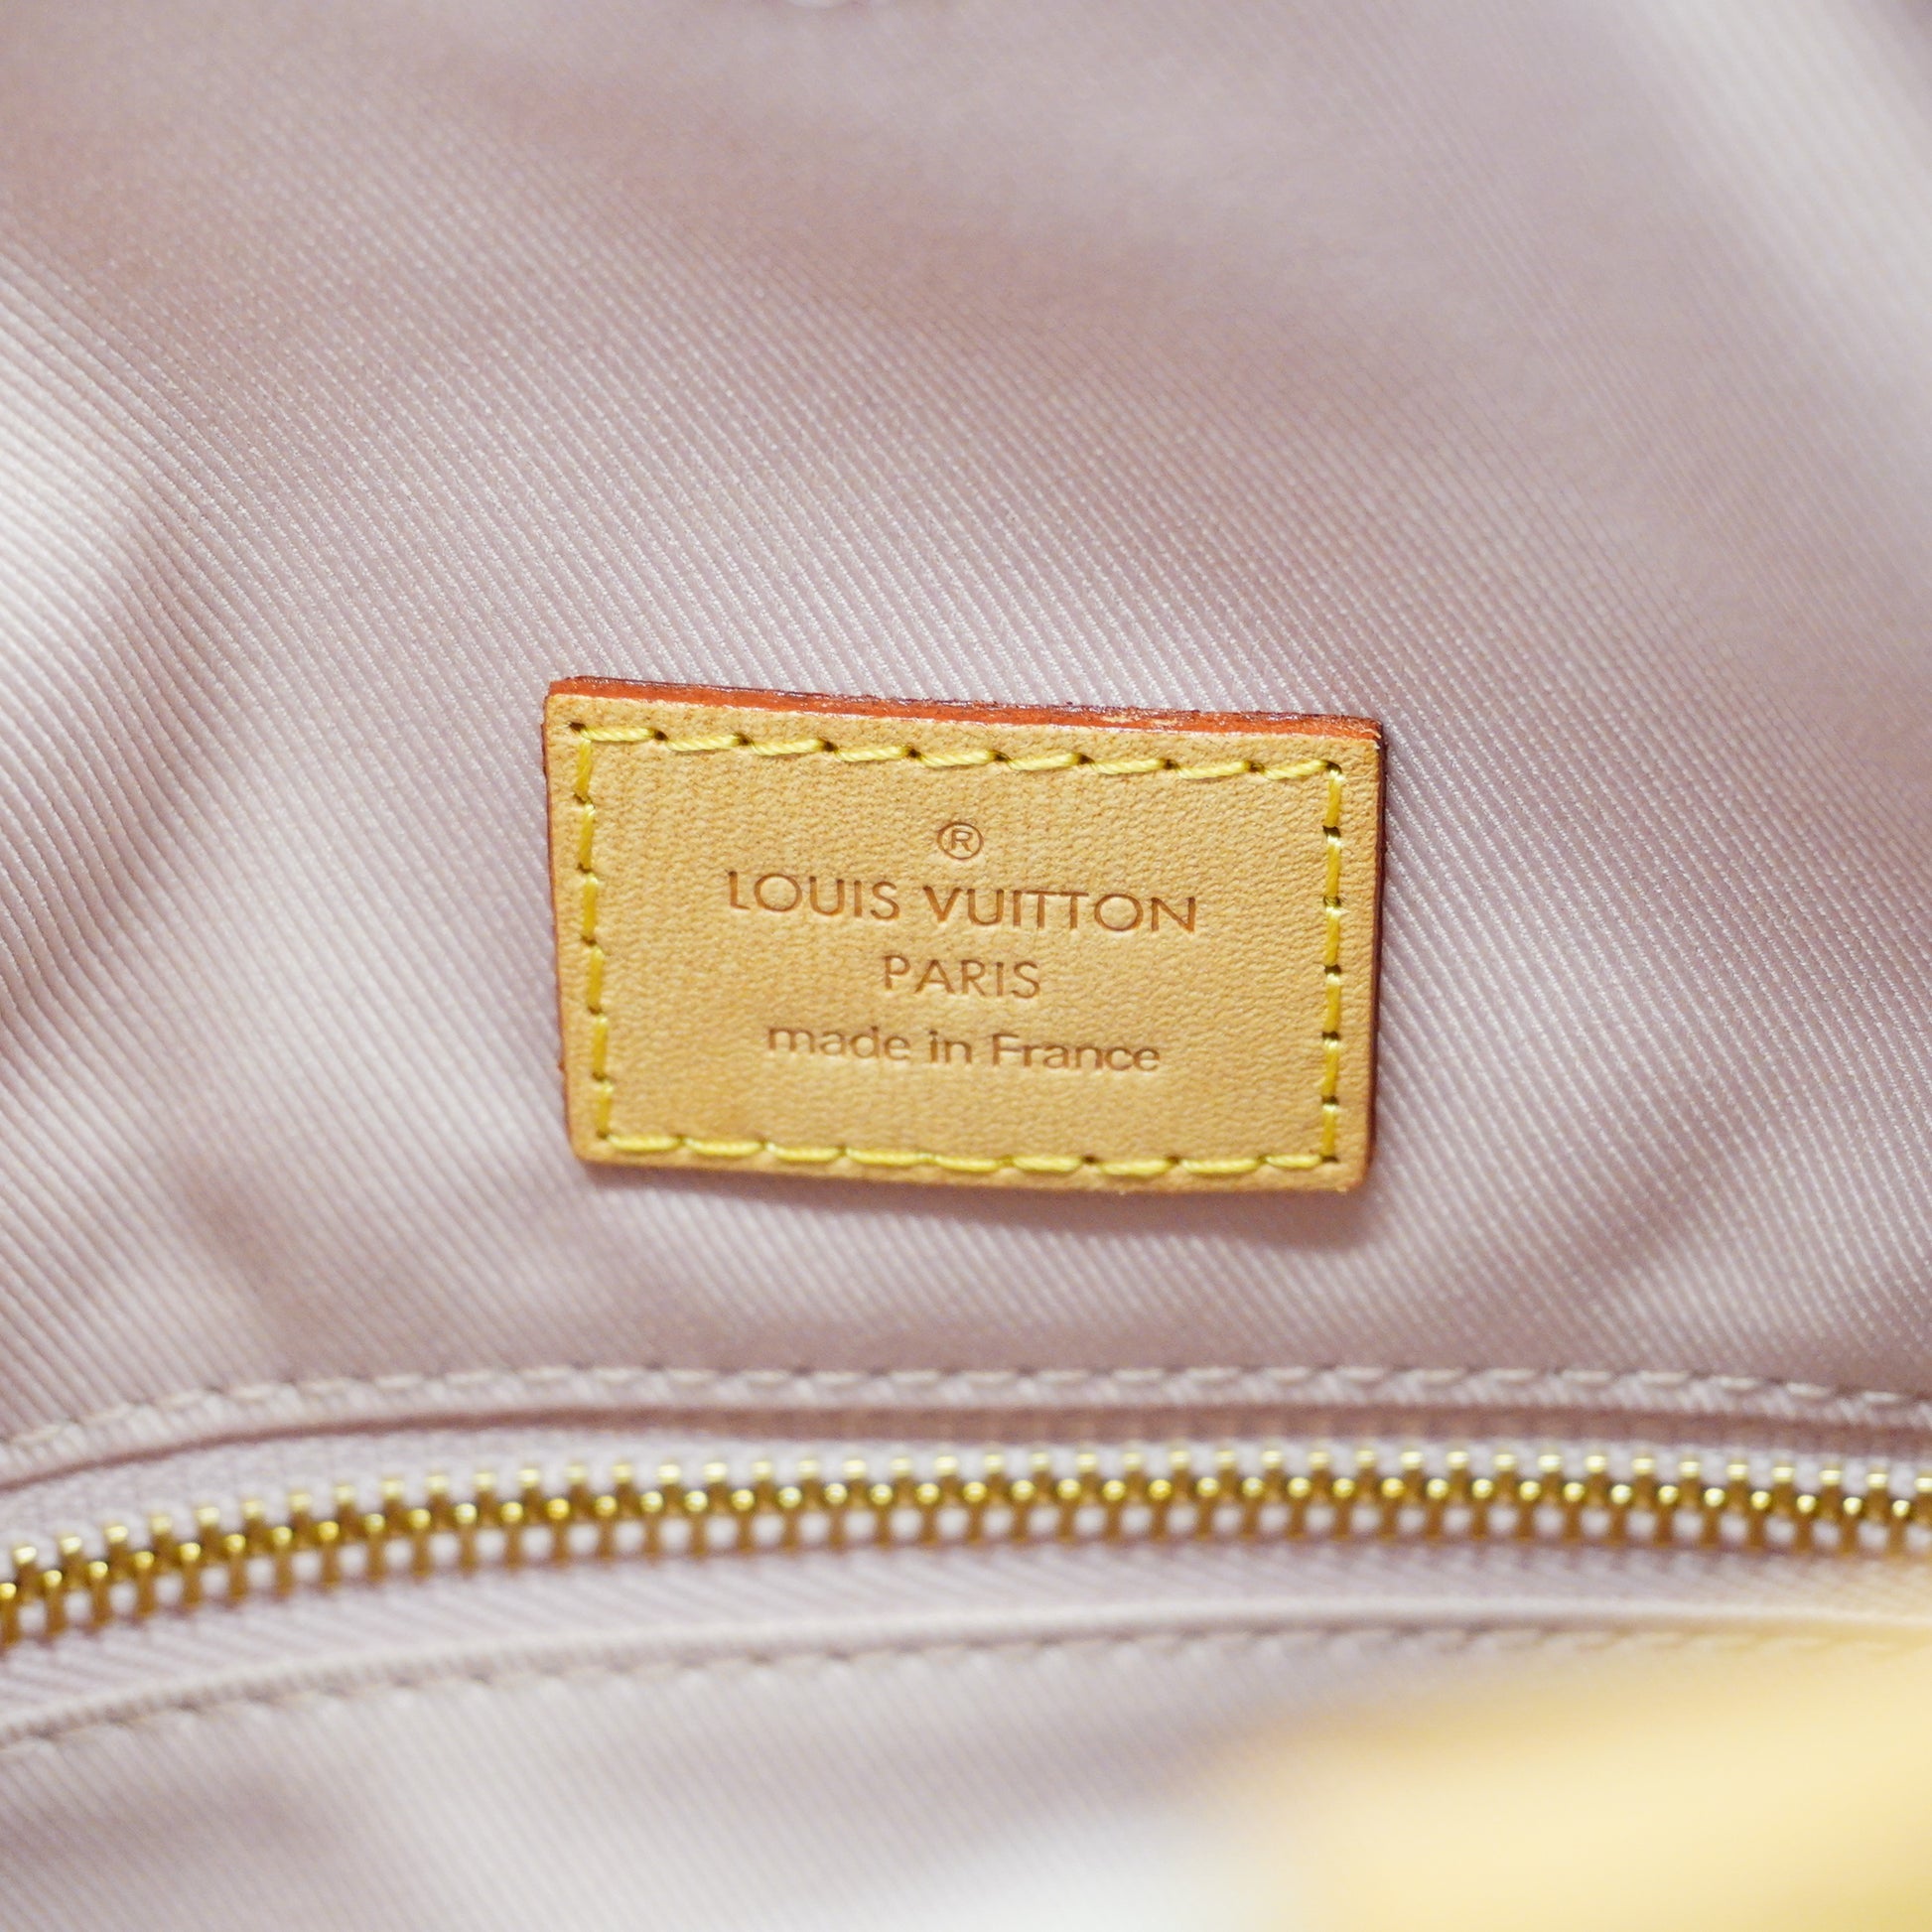 Shop Louis Vuitton DAMIER Graceful pm (M43701, N42249, N44044) by LeO.